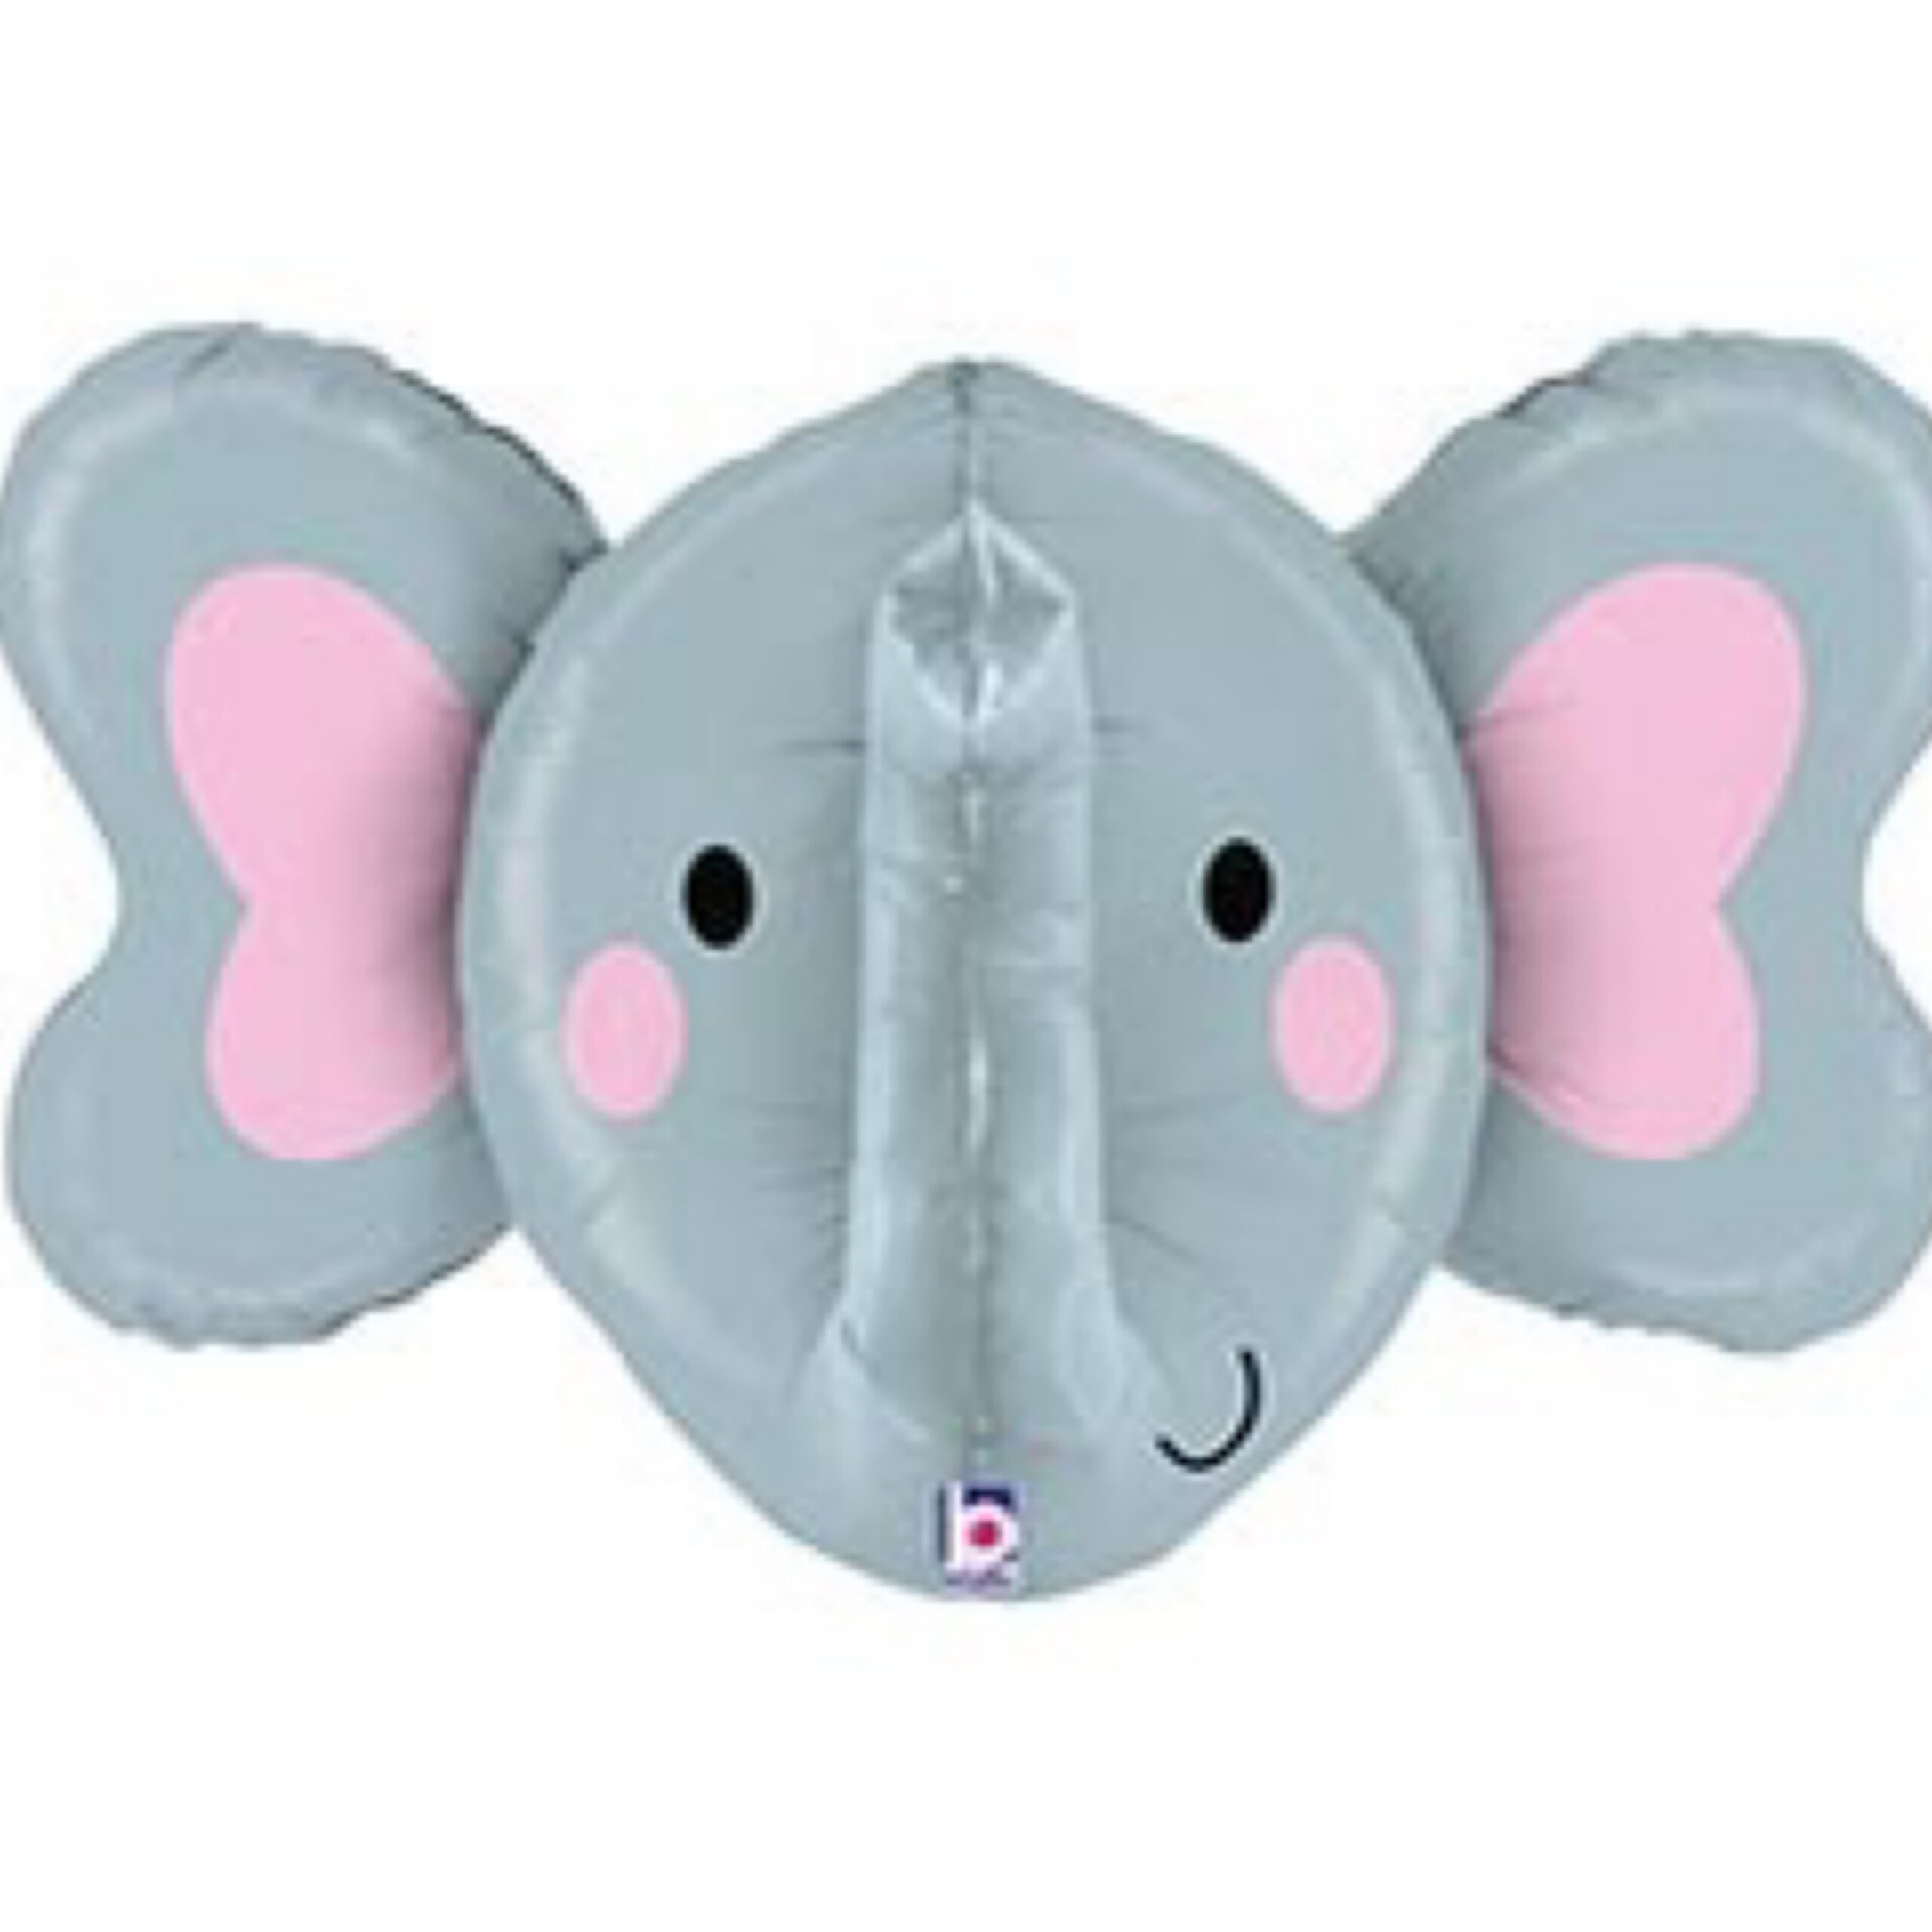 34” Elephant head balloons